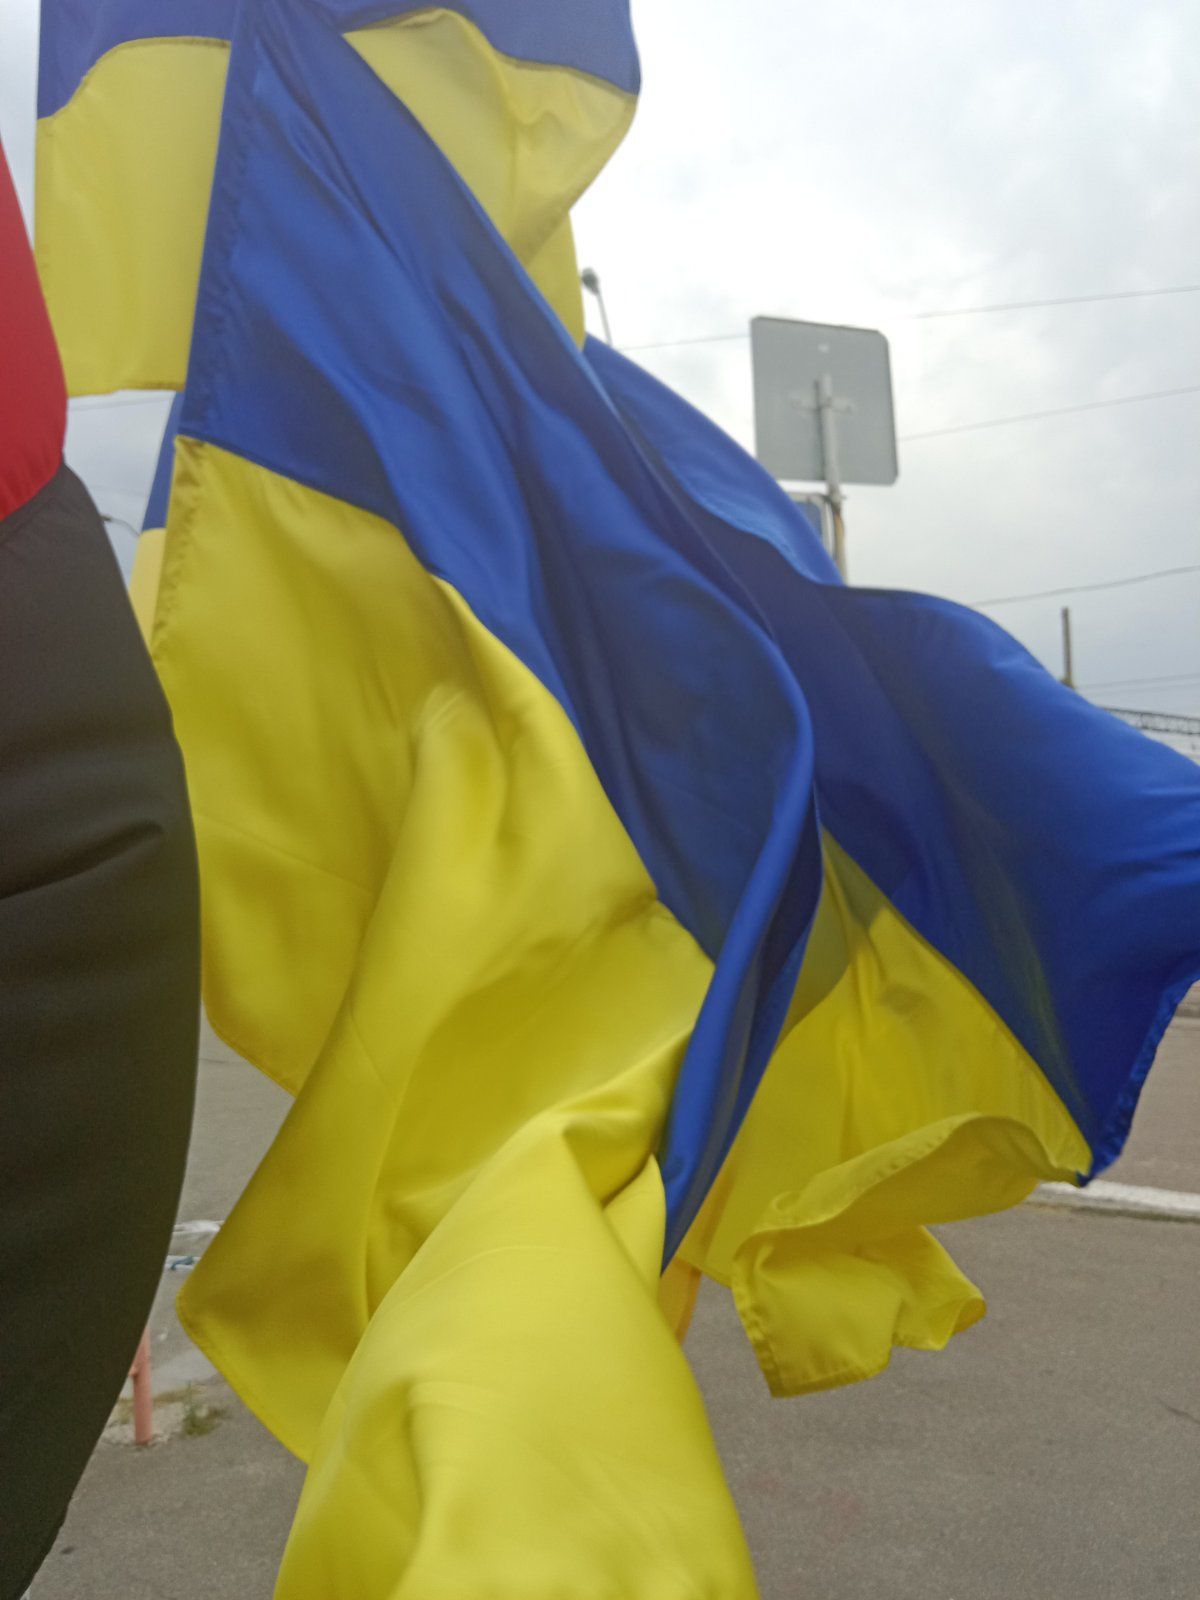 Прапор України , Прапор УПА.
Штучний шовк